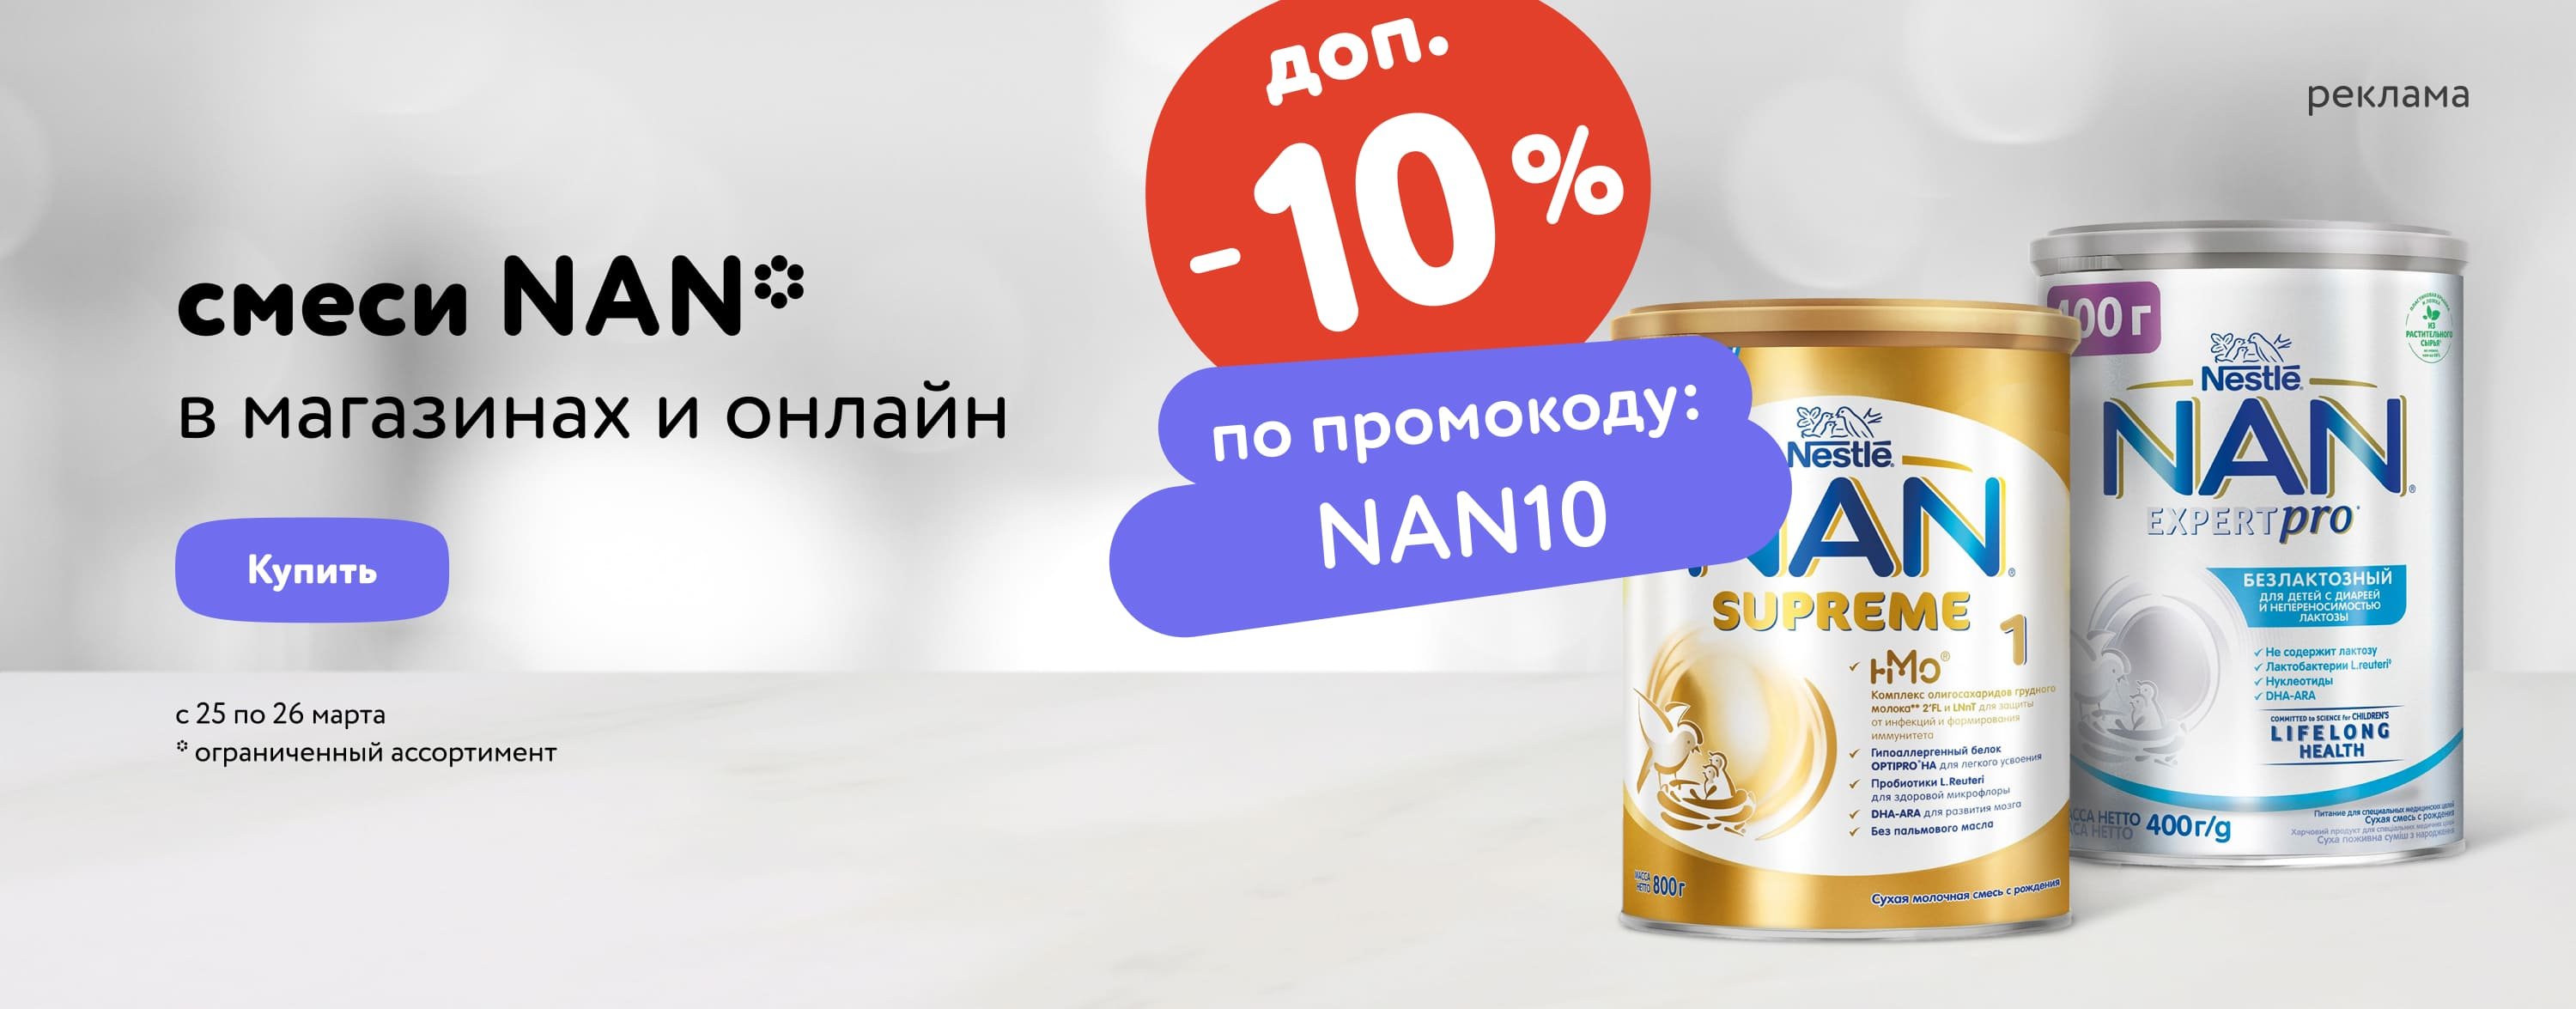 Доп. скидка 10 % на смеси NAN по промокоду статика